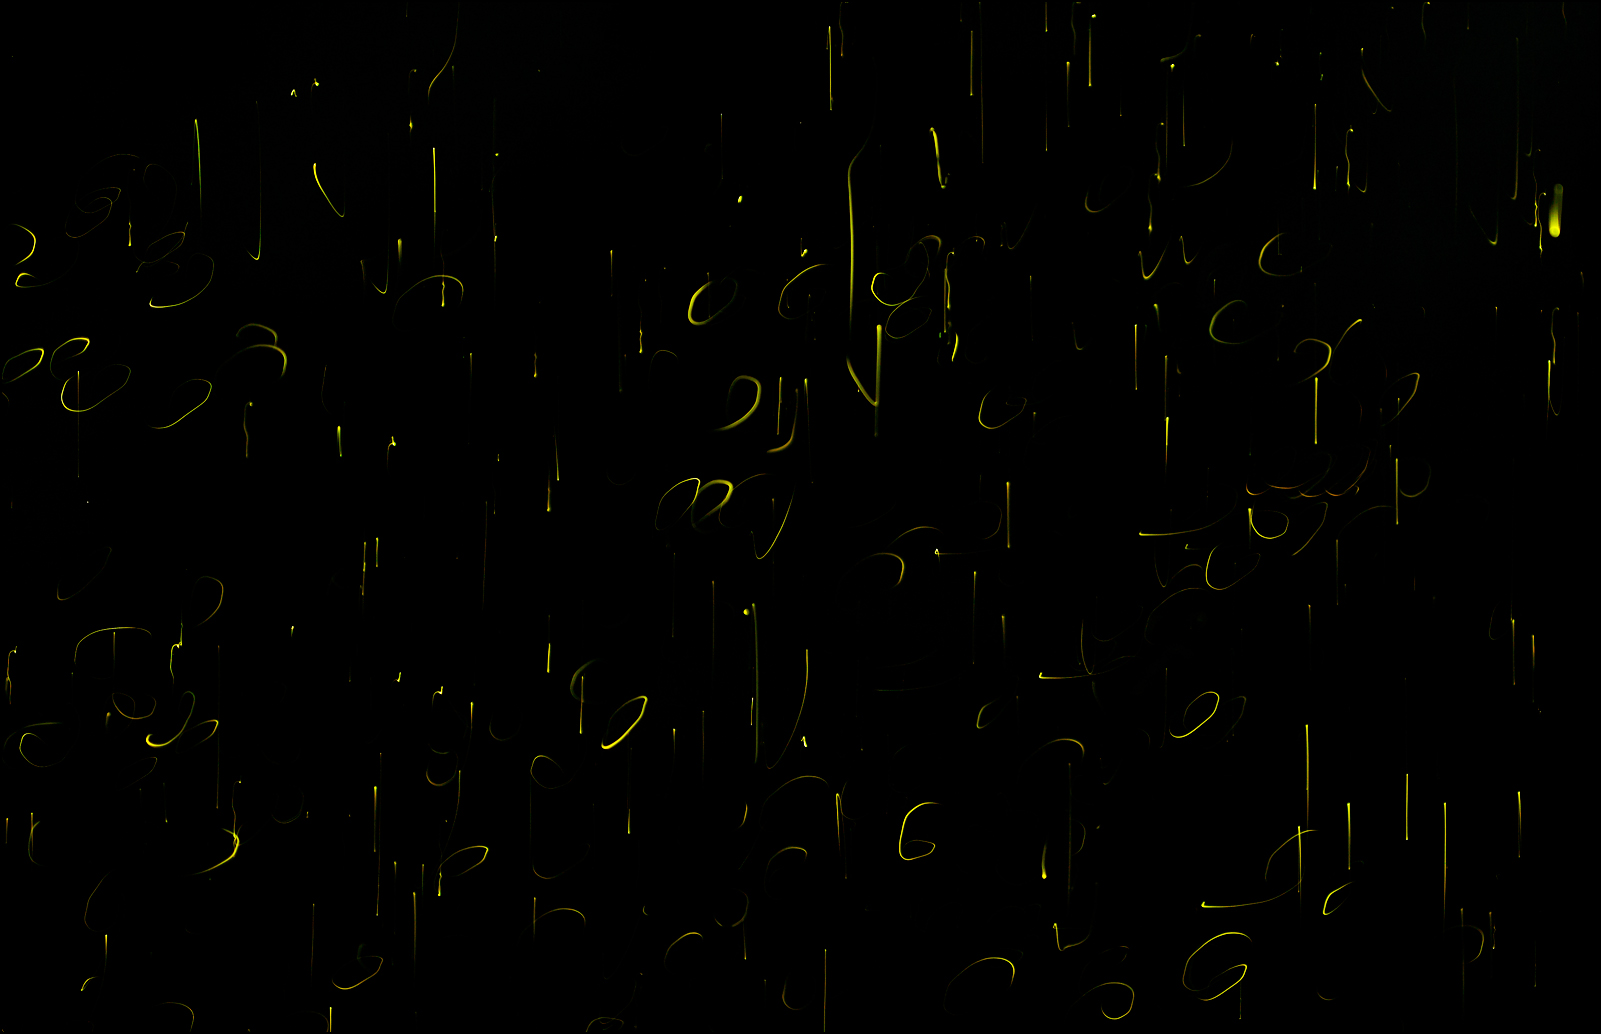 Fireflies - Print vs Display